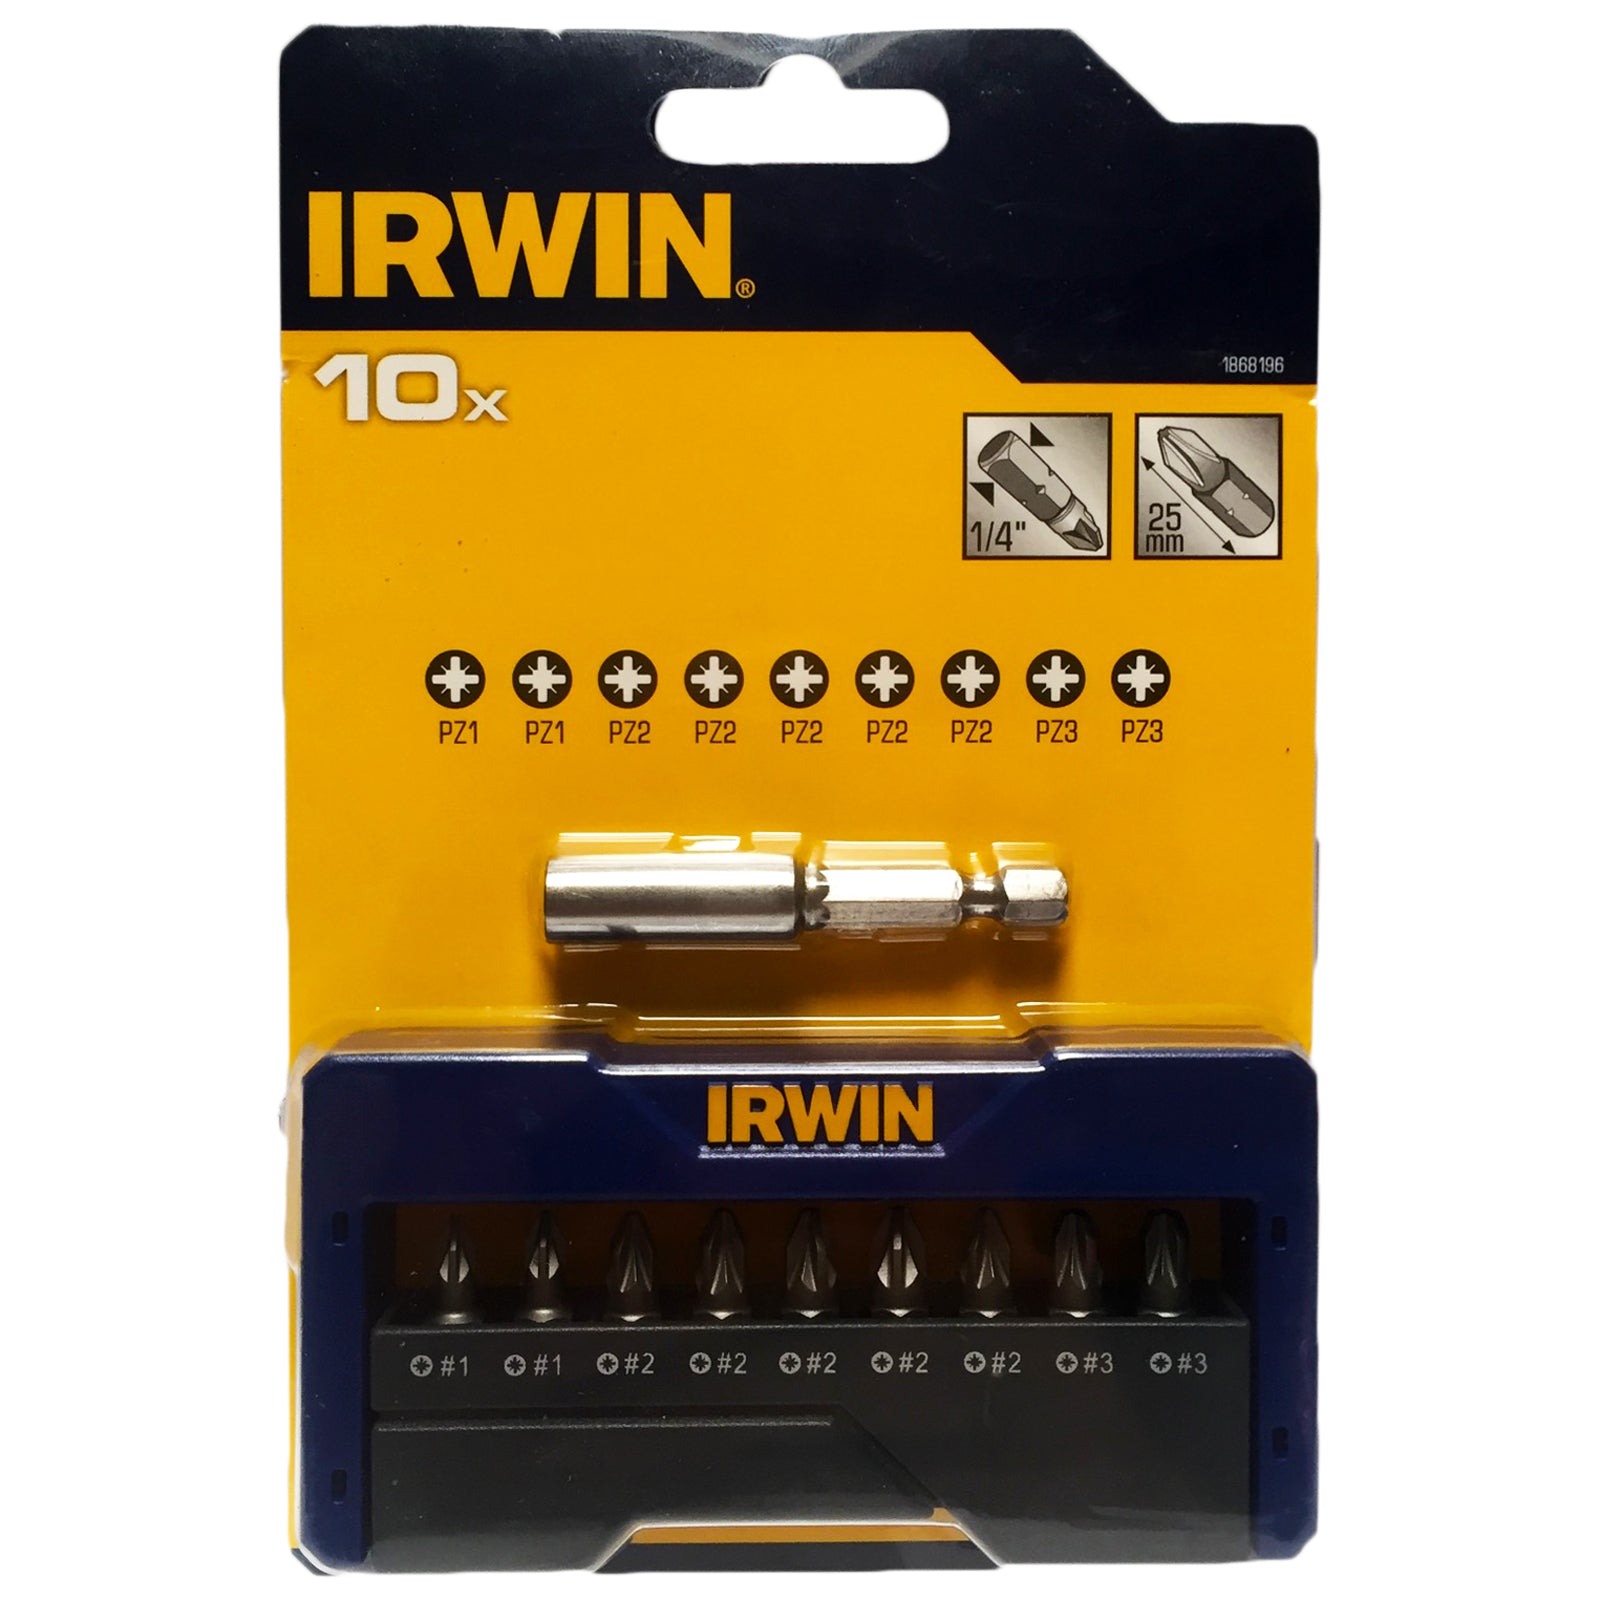 Irwin 10 Piece Pozi Screwdriver Bits and Holder Set